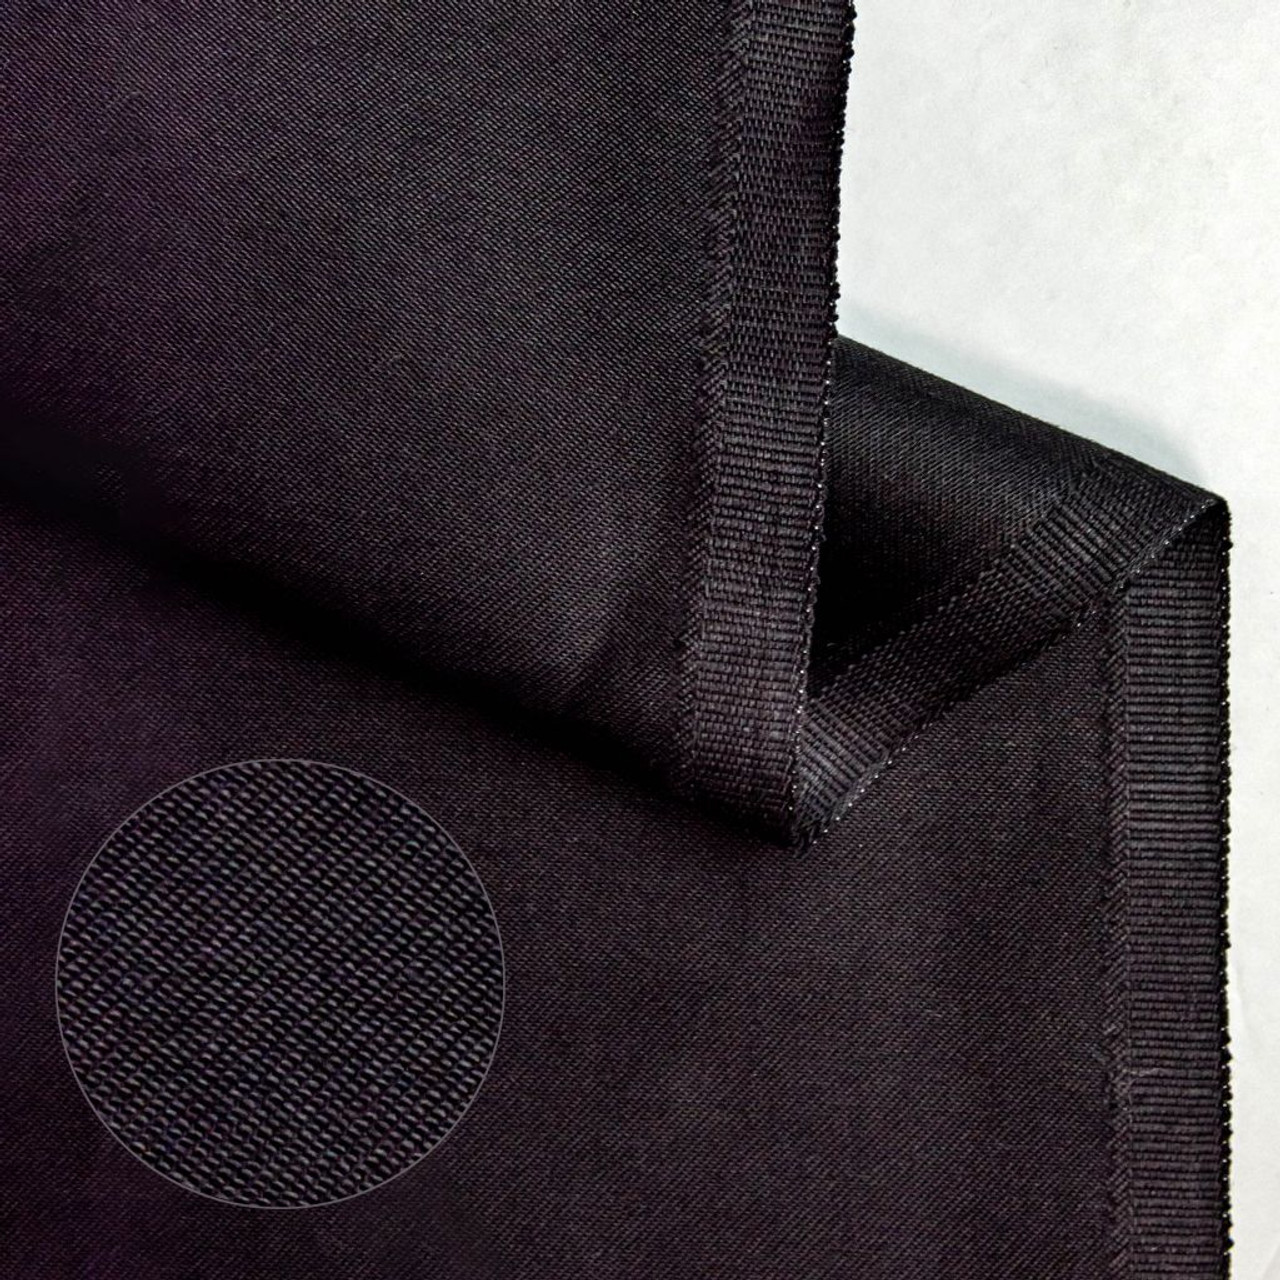 RM Coco Fabric RM Designer Deluxe Cotton Sateen Black